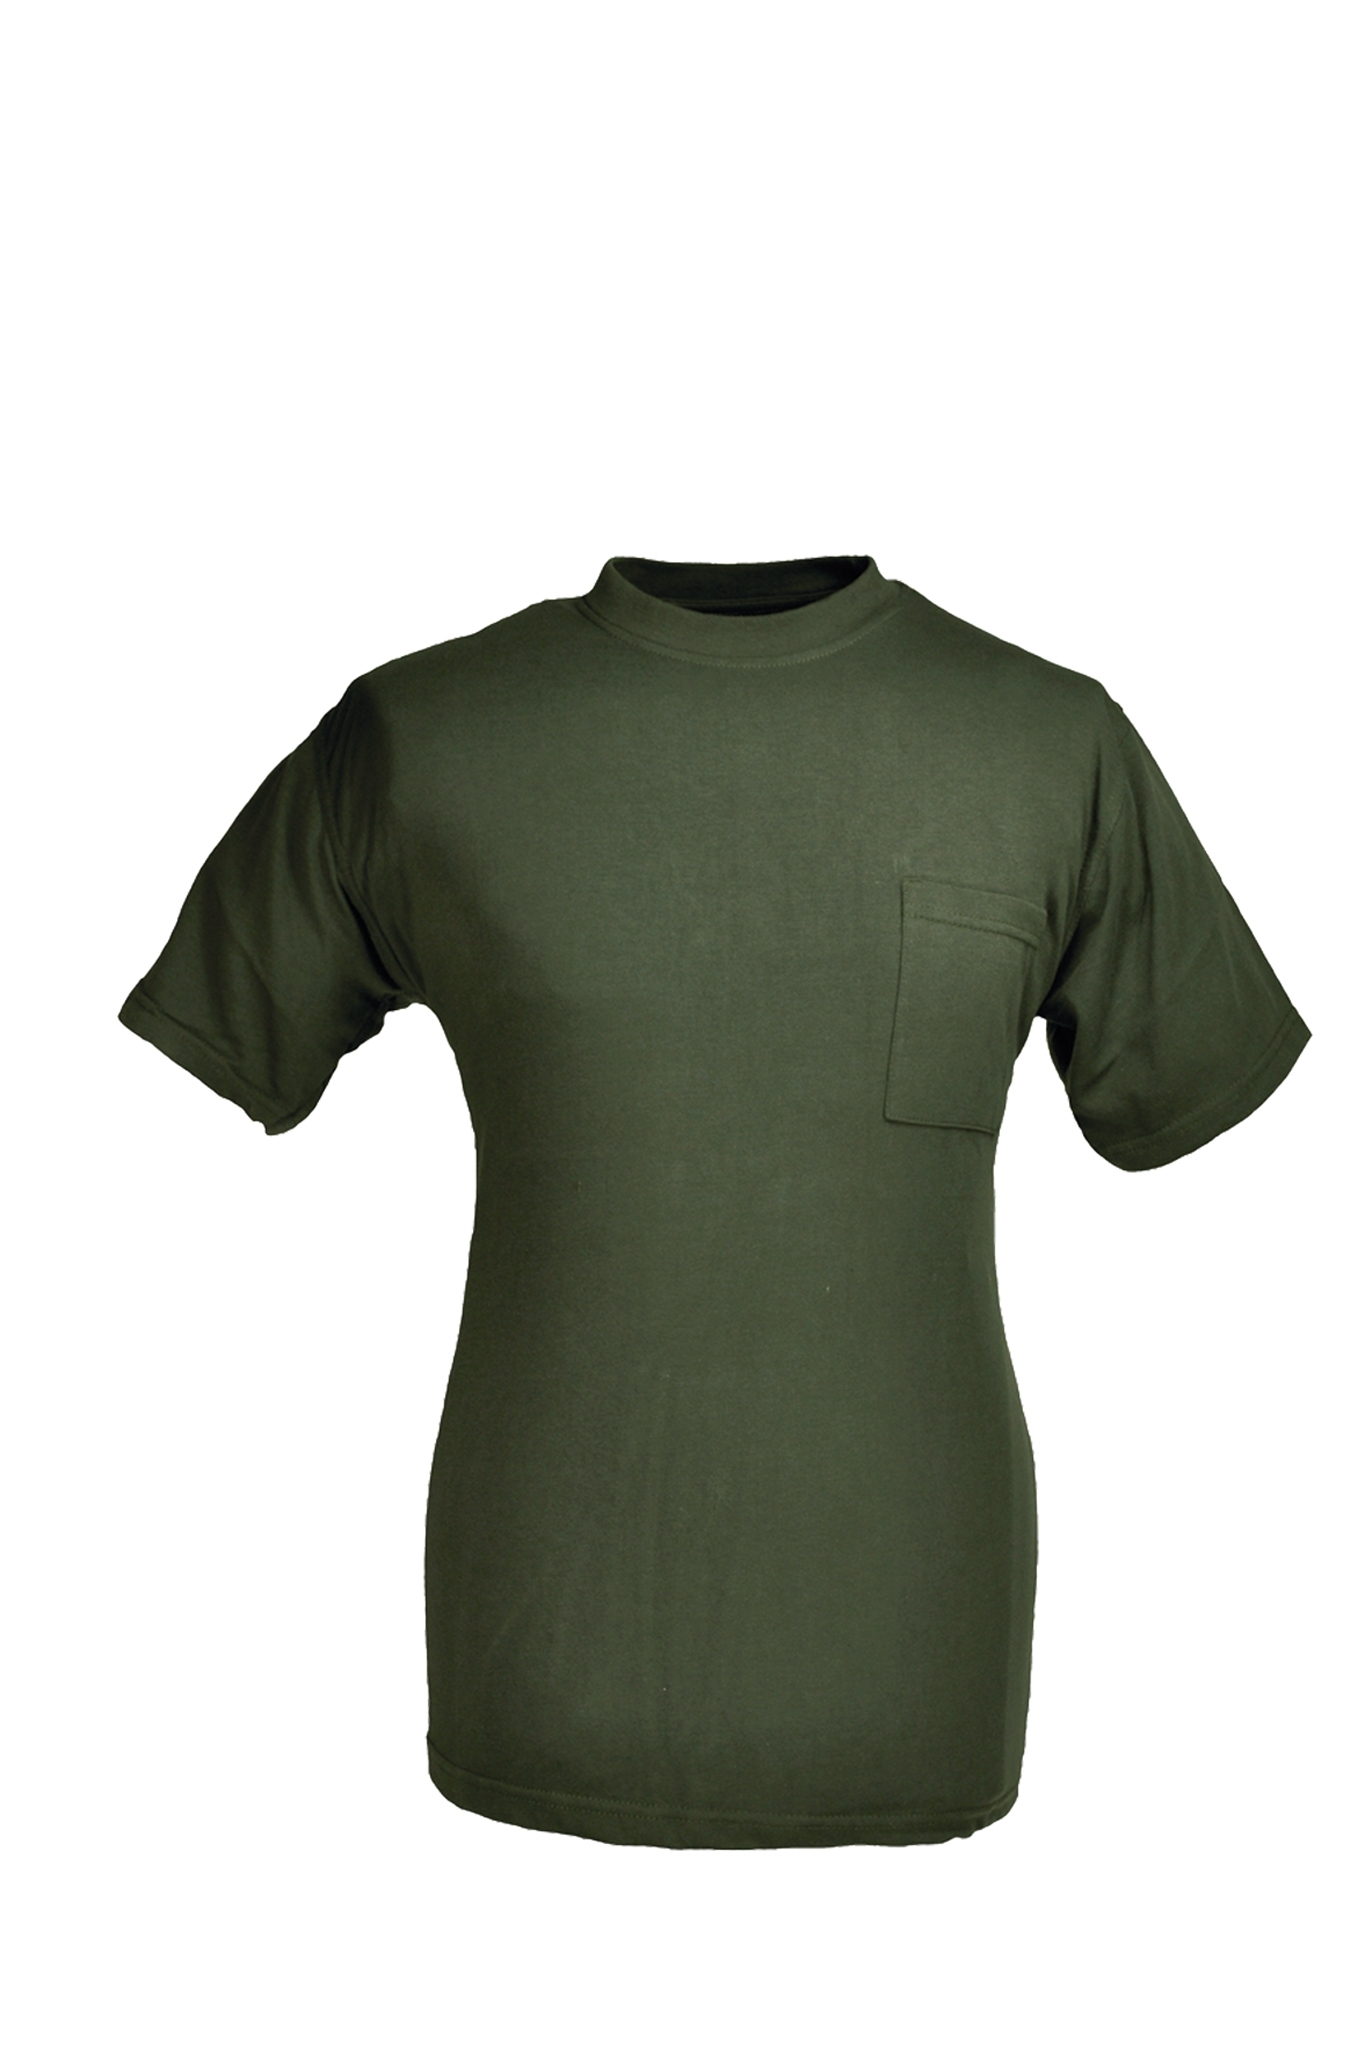 Rundhals T-Shirt oliv Gr.L 10227843